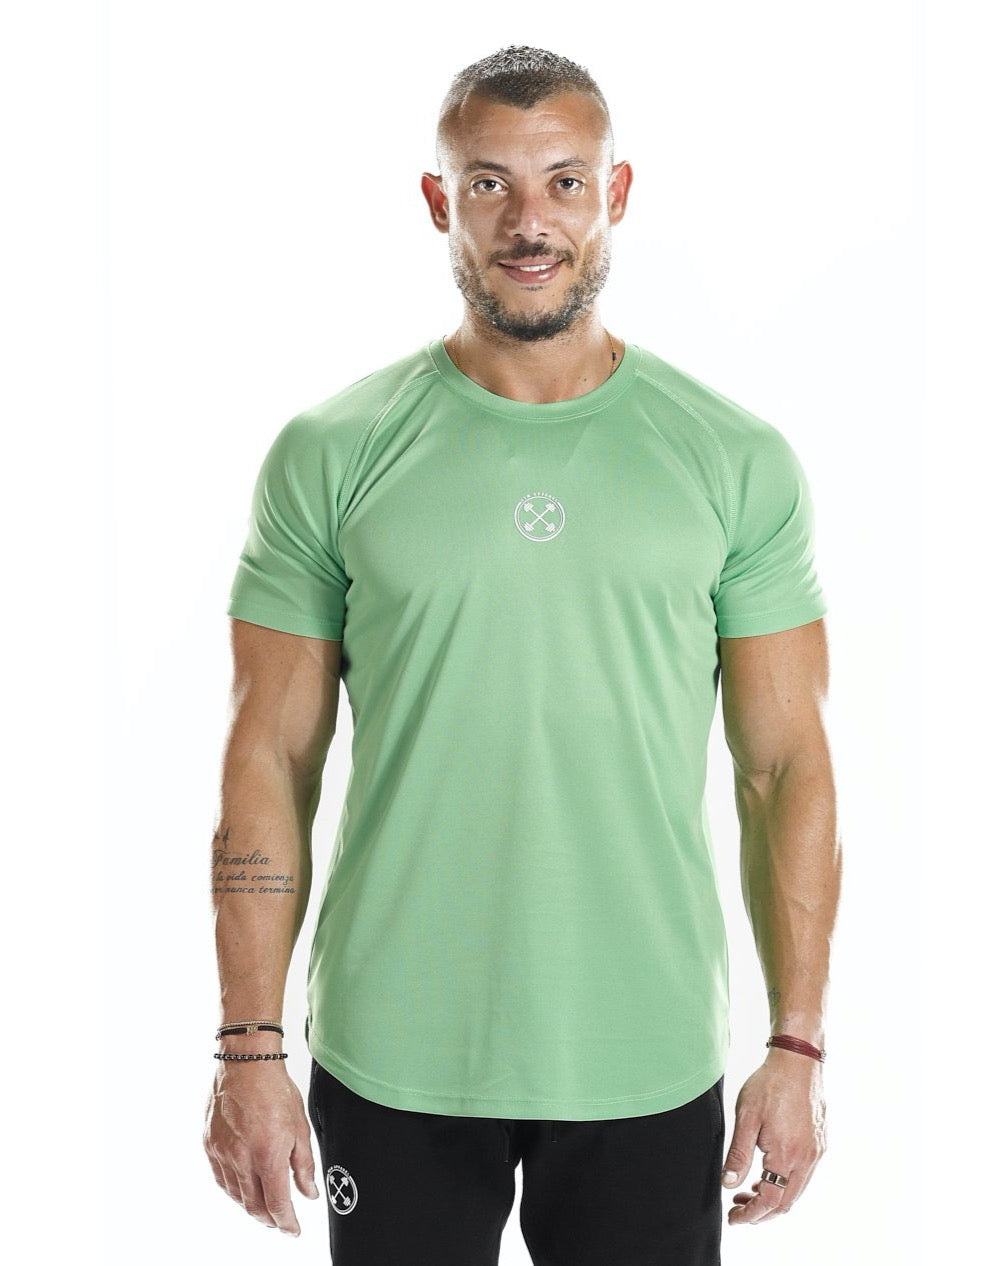 ULTRA Mesh Raglan T-Shirt 2.0 - T-Shirt - Gym Apparel Egypt